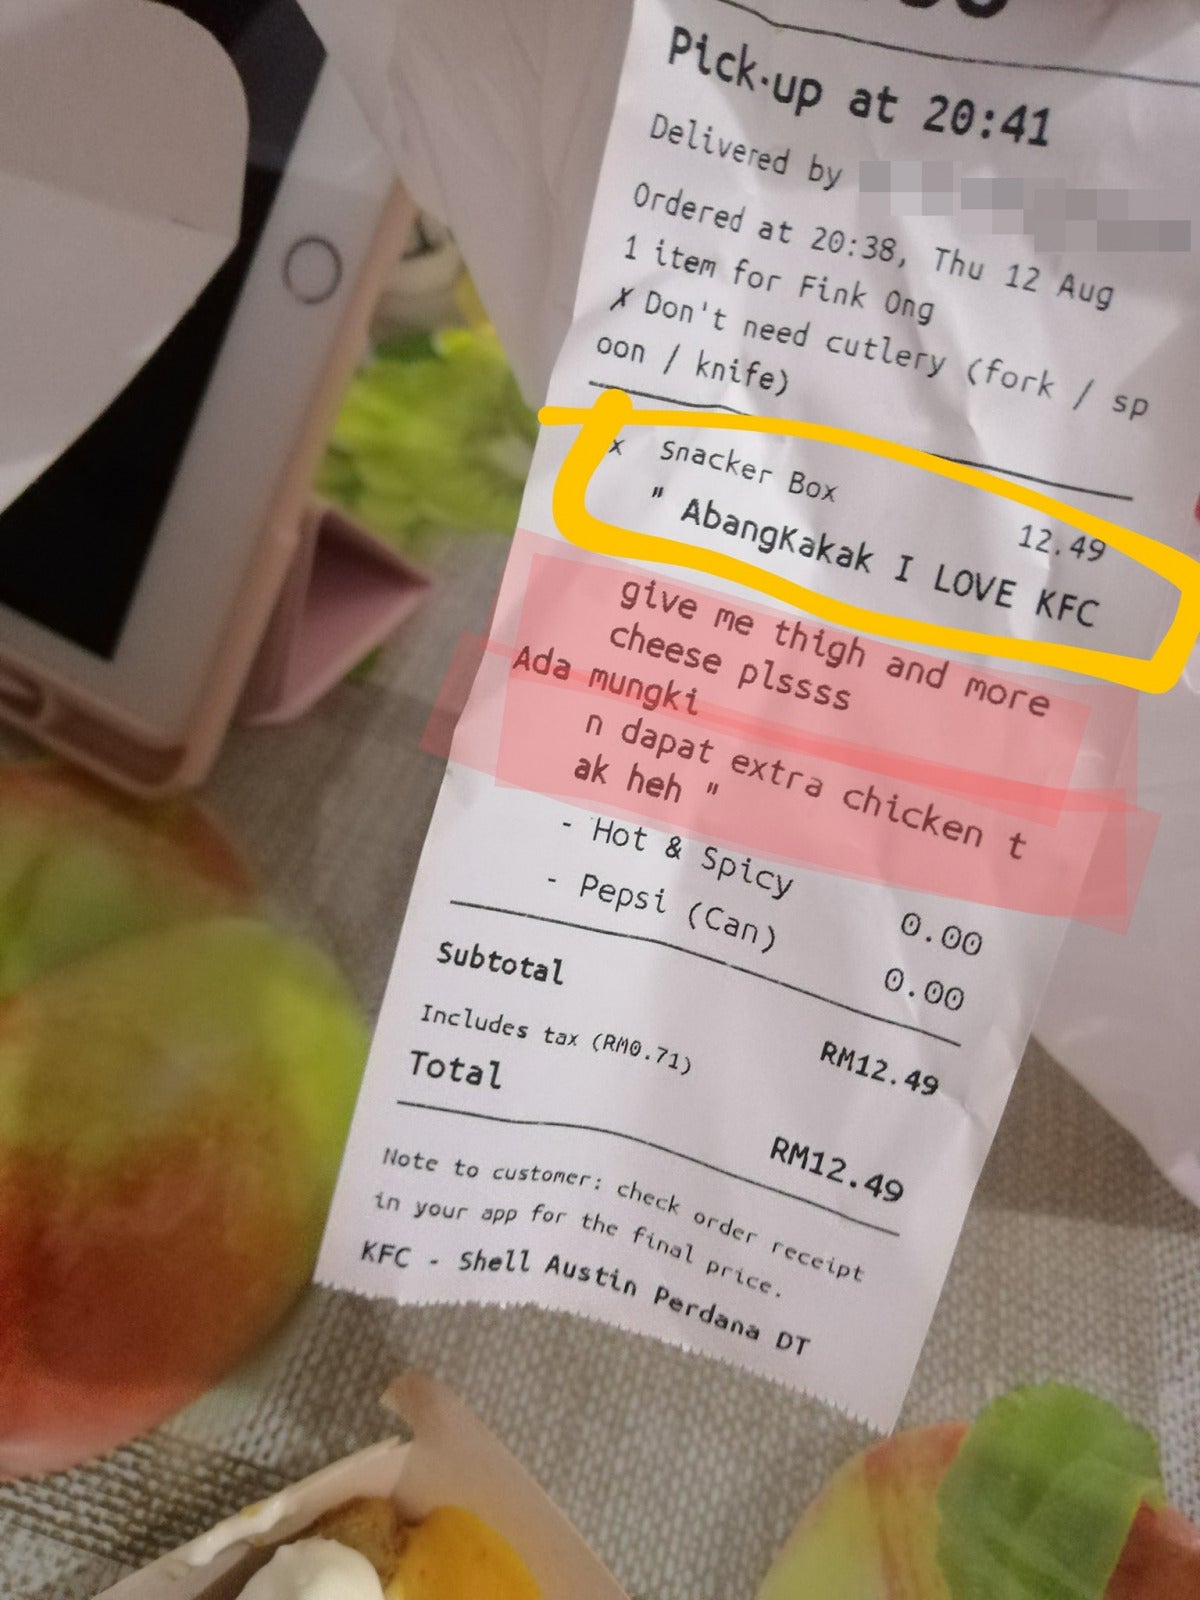 Malaysian writes I LOVE KFC on remarks